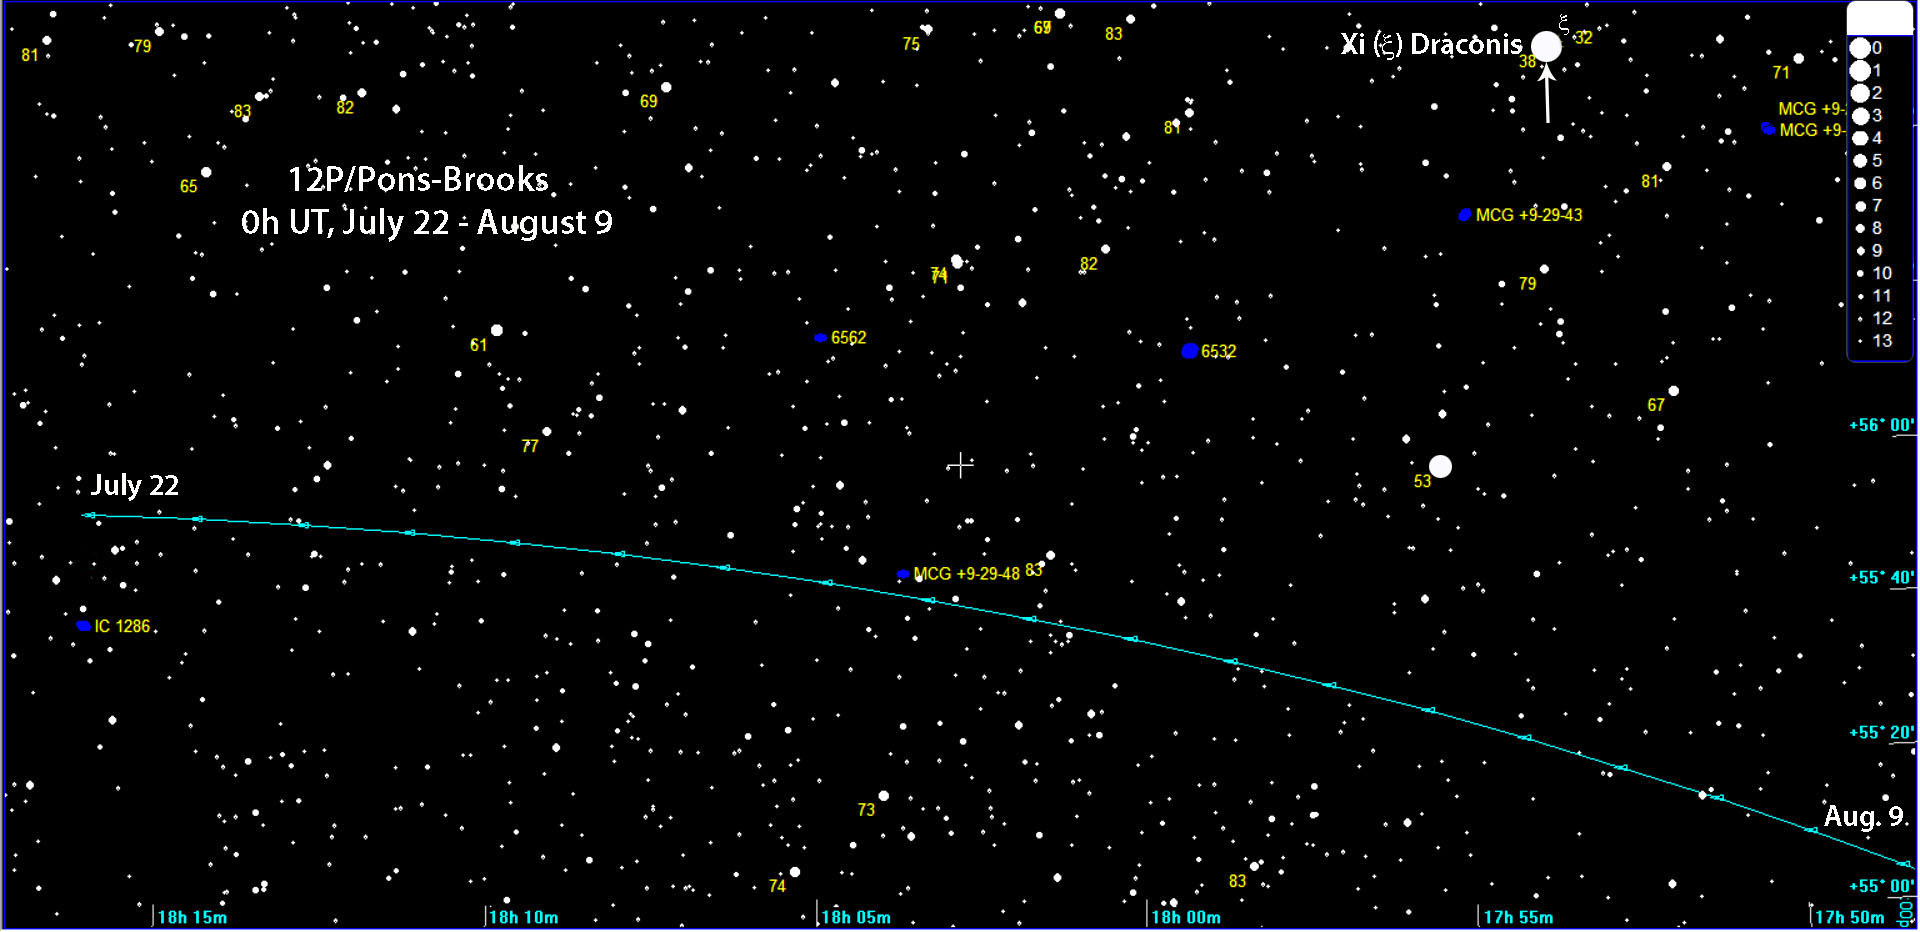 See Comet 12P/Pons-Brooks in Outburst! - Sky & Telescope - Sky & Telescope